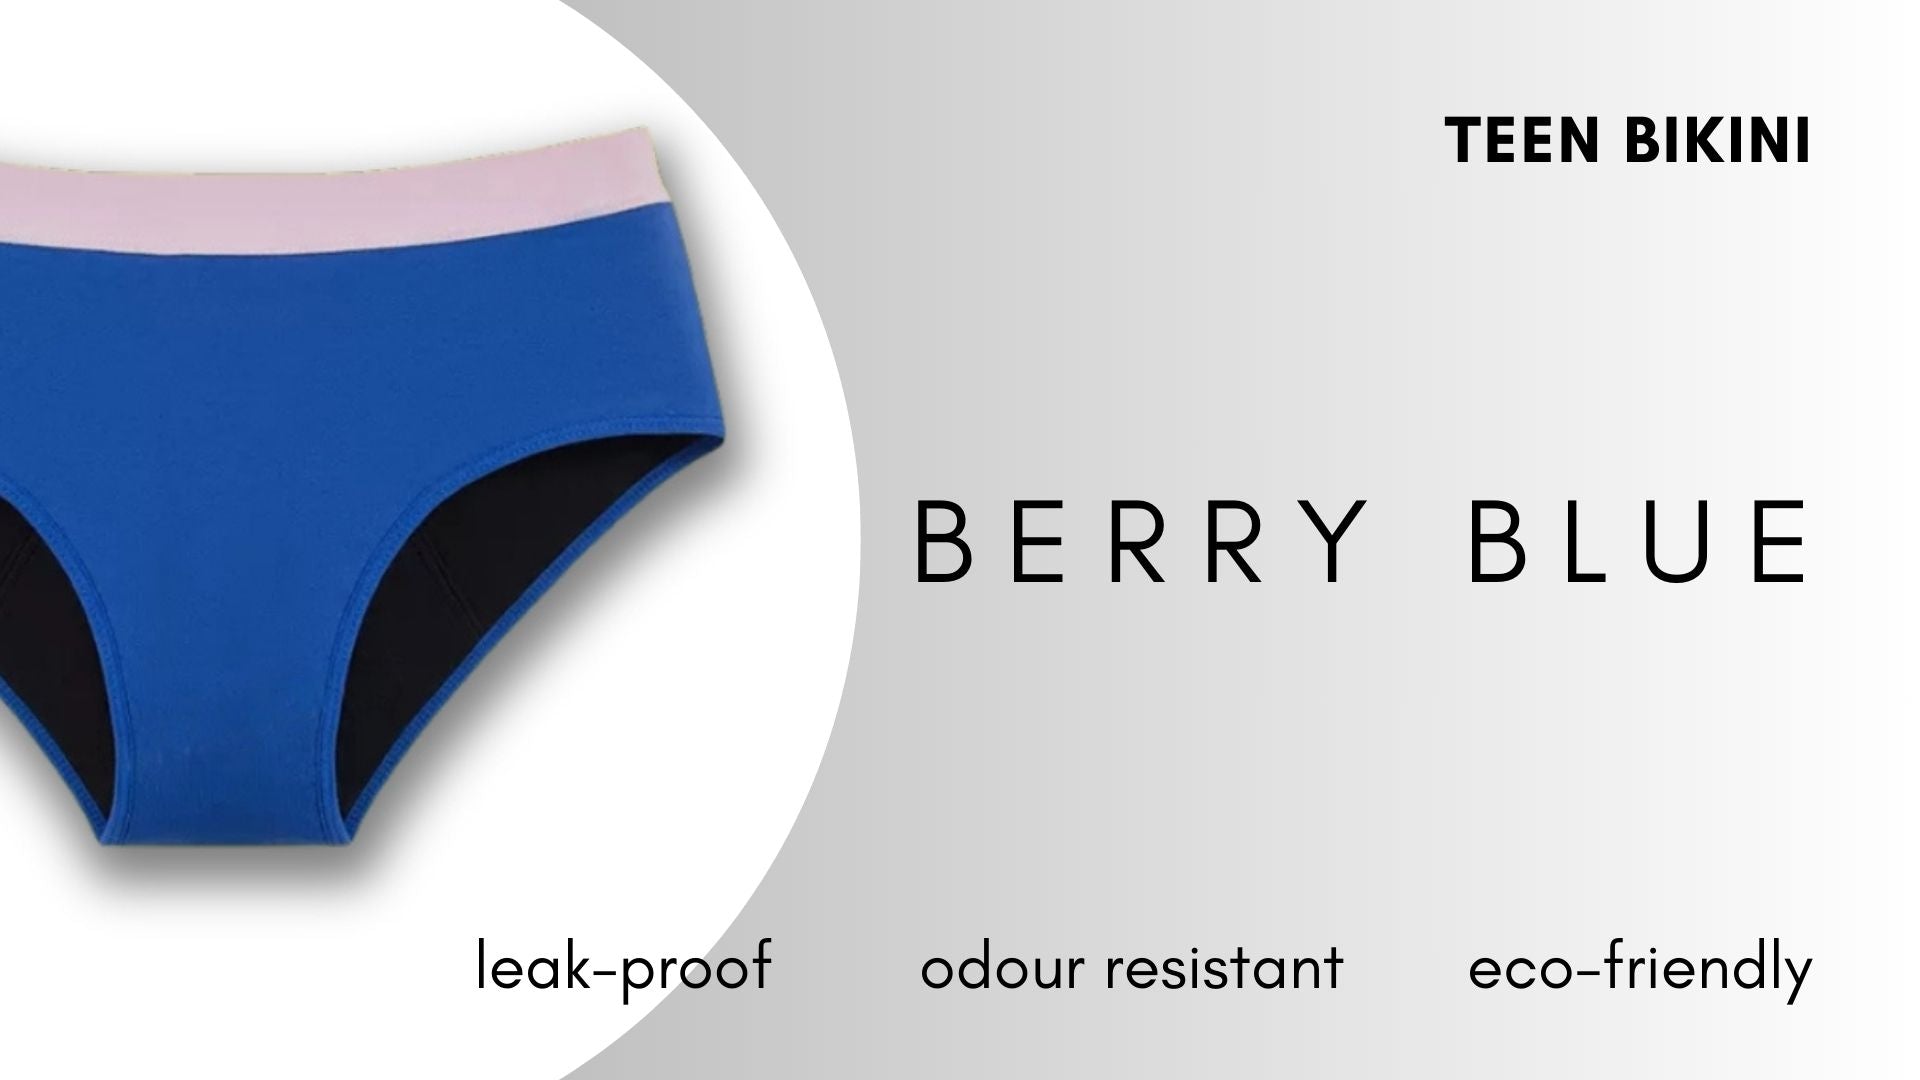 Teen Bikini - Berry Blue Period Underwear